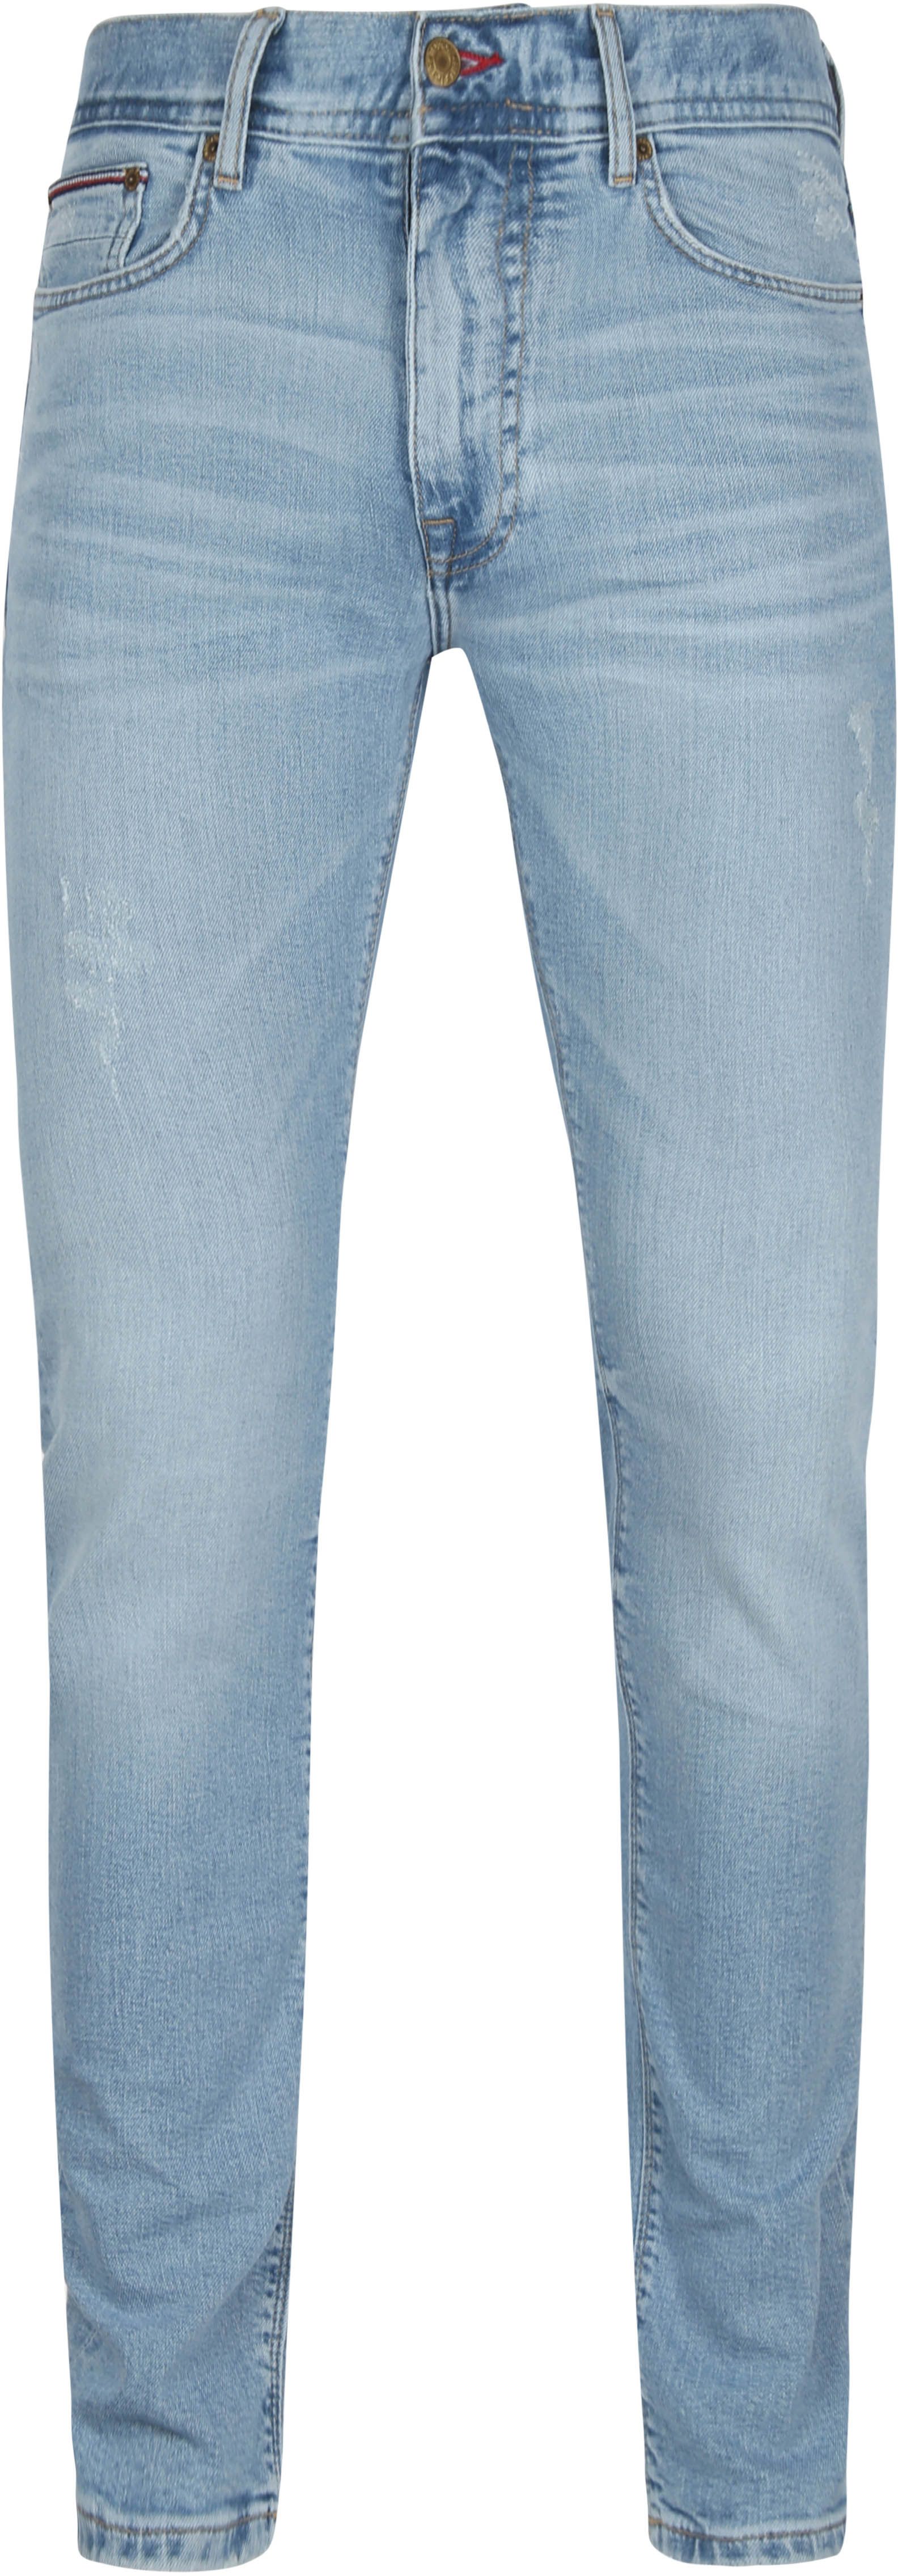 Tommy Hilfiger Jeans Slim Light Blue size W 33